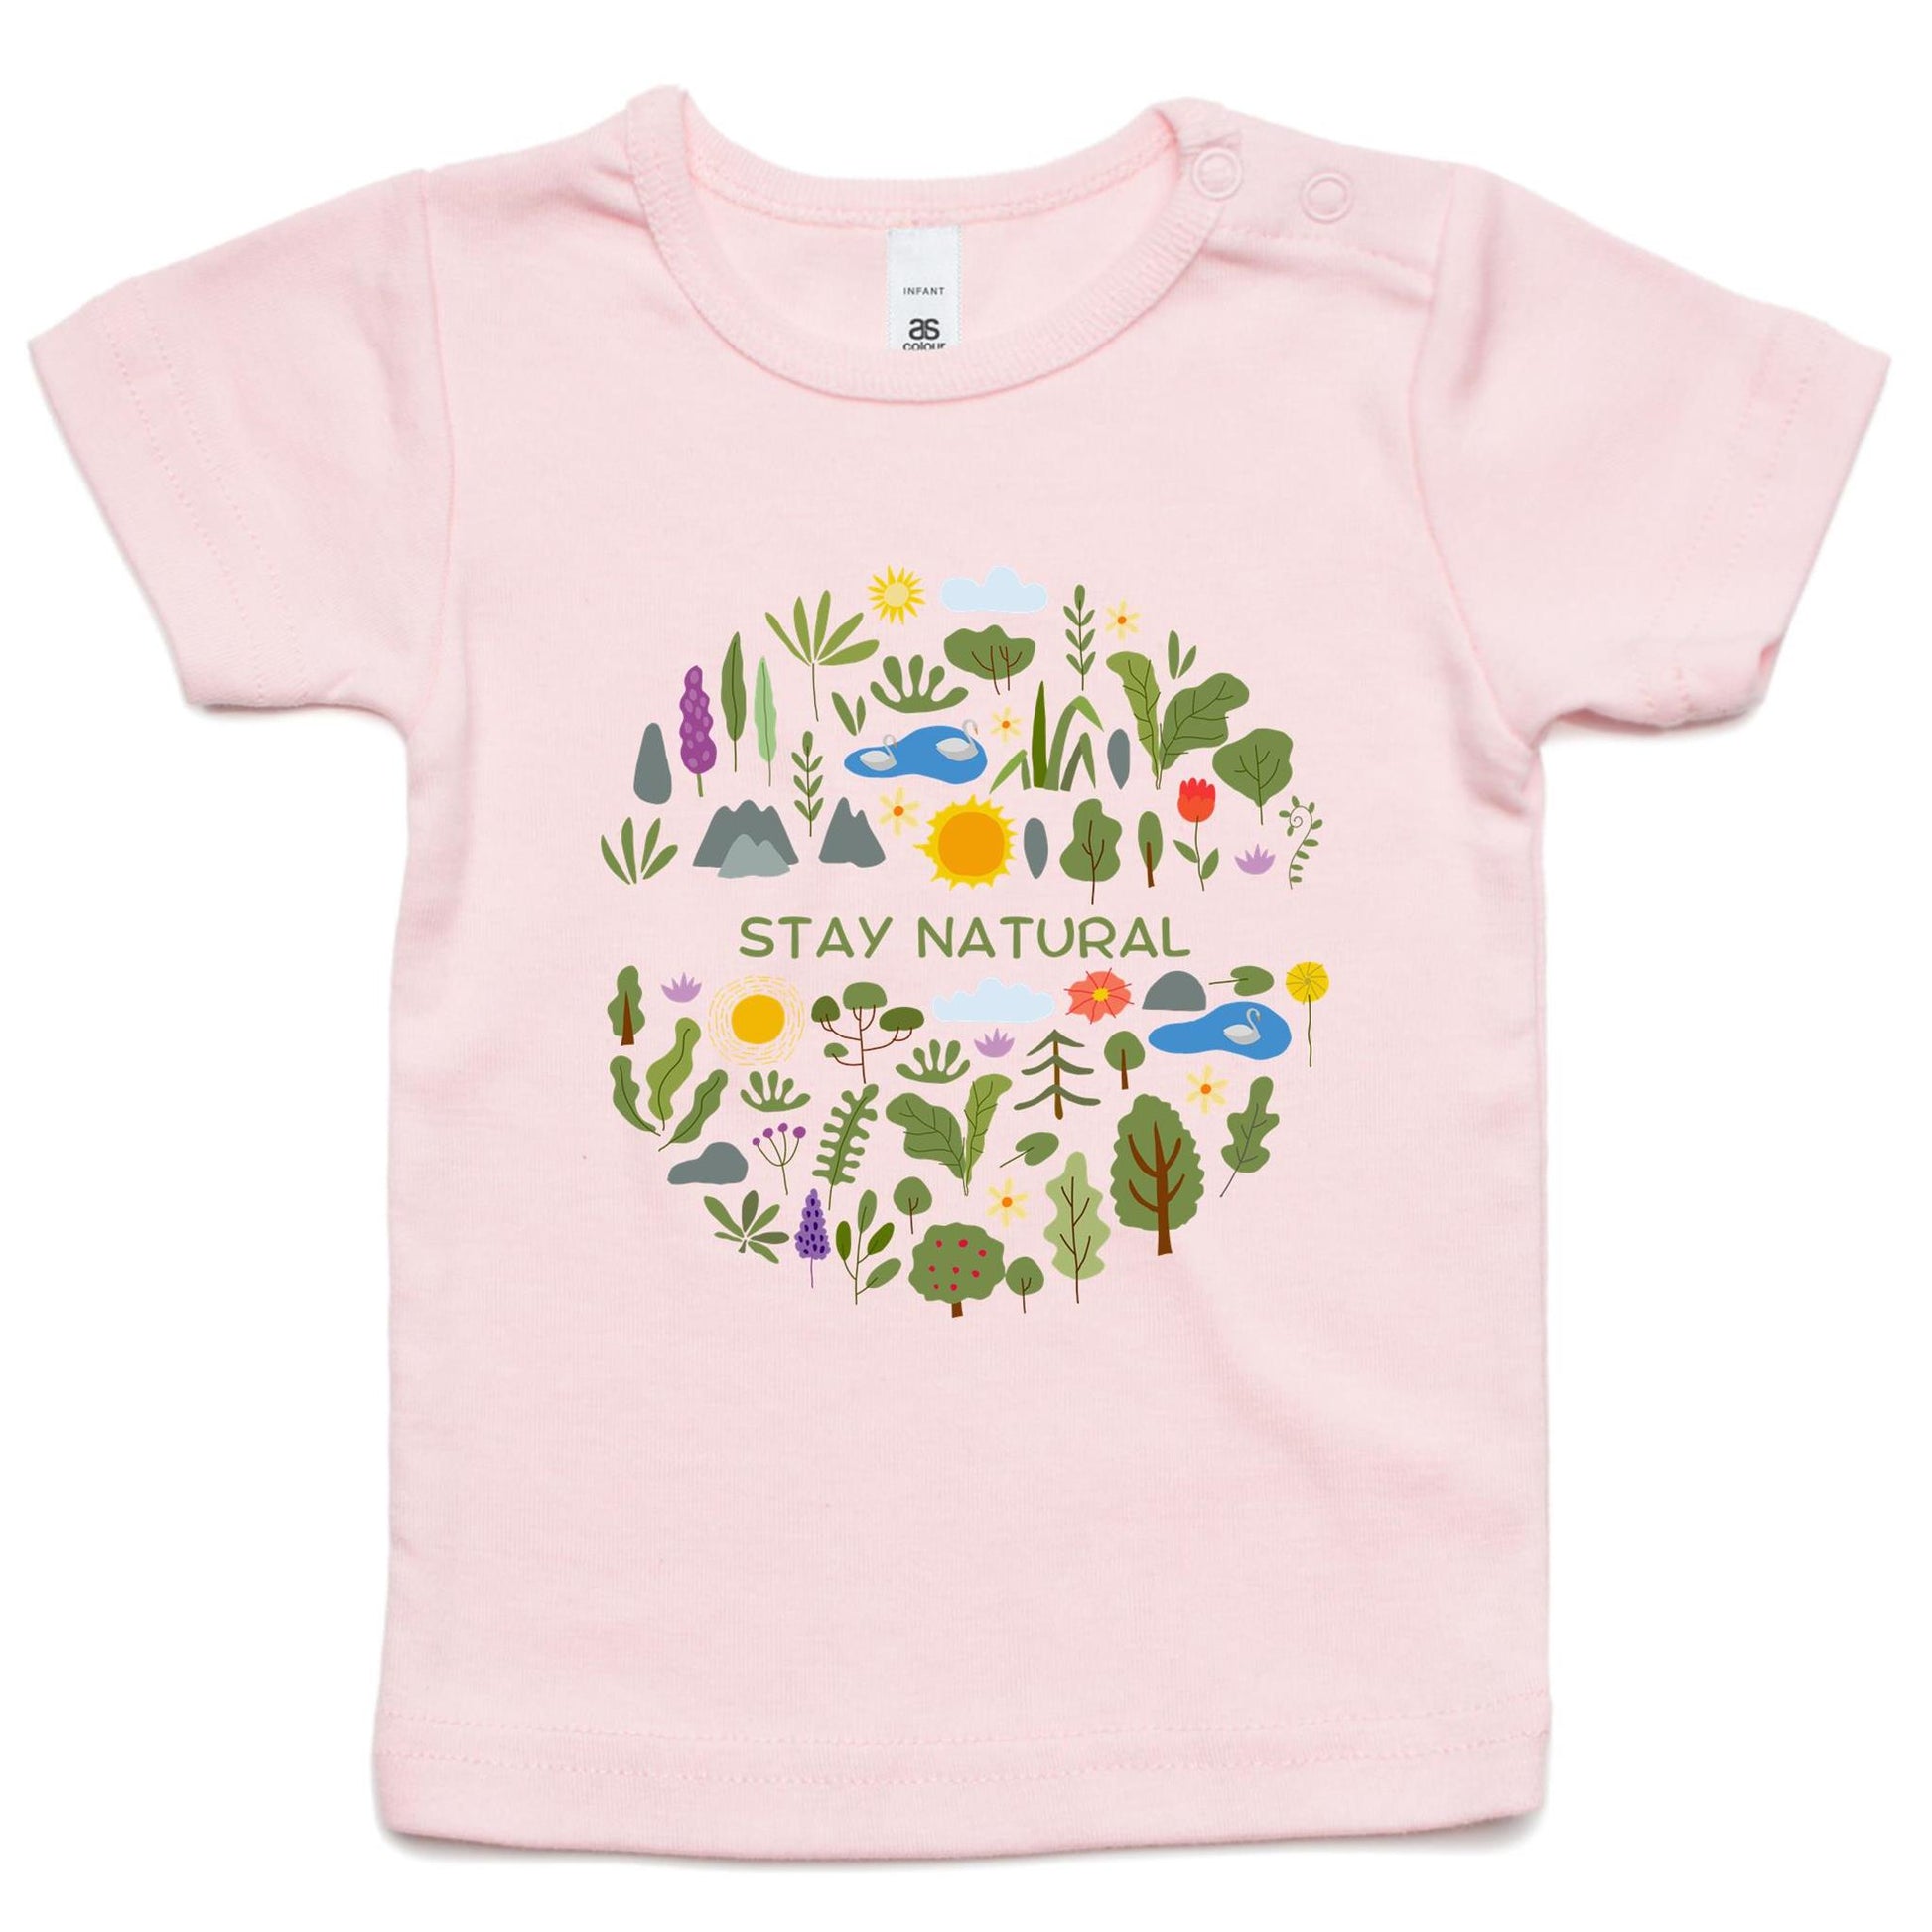 Stay Natural - Baby T-shirt Pink Baby T-shirt Environment Plants